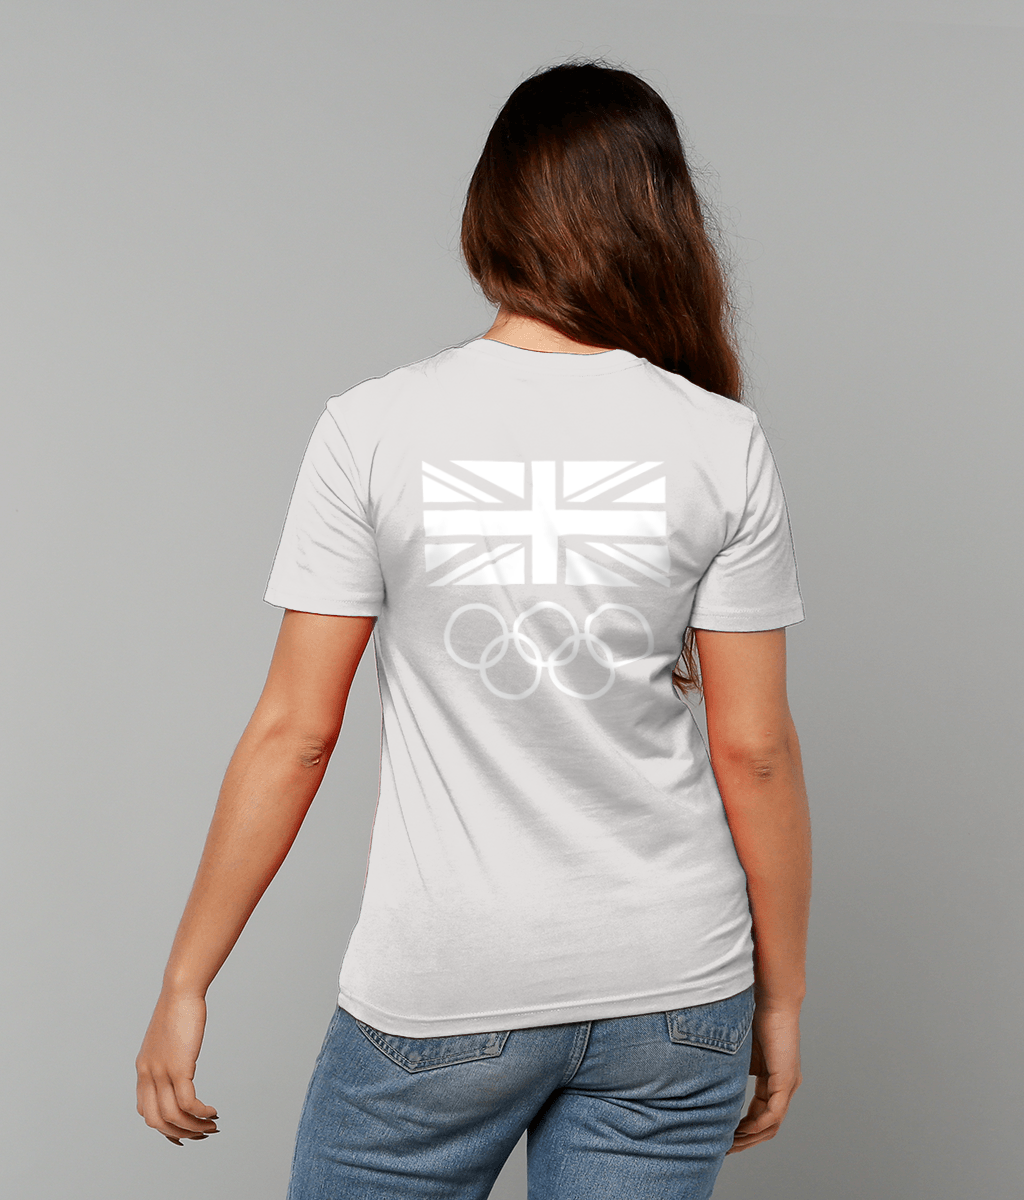 Team GB Small Union Cream Heather Grey T-shirt